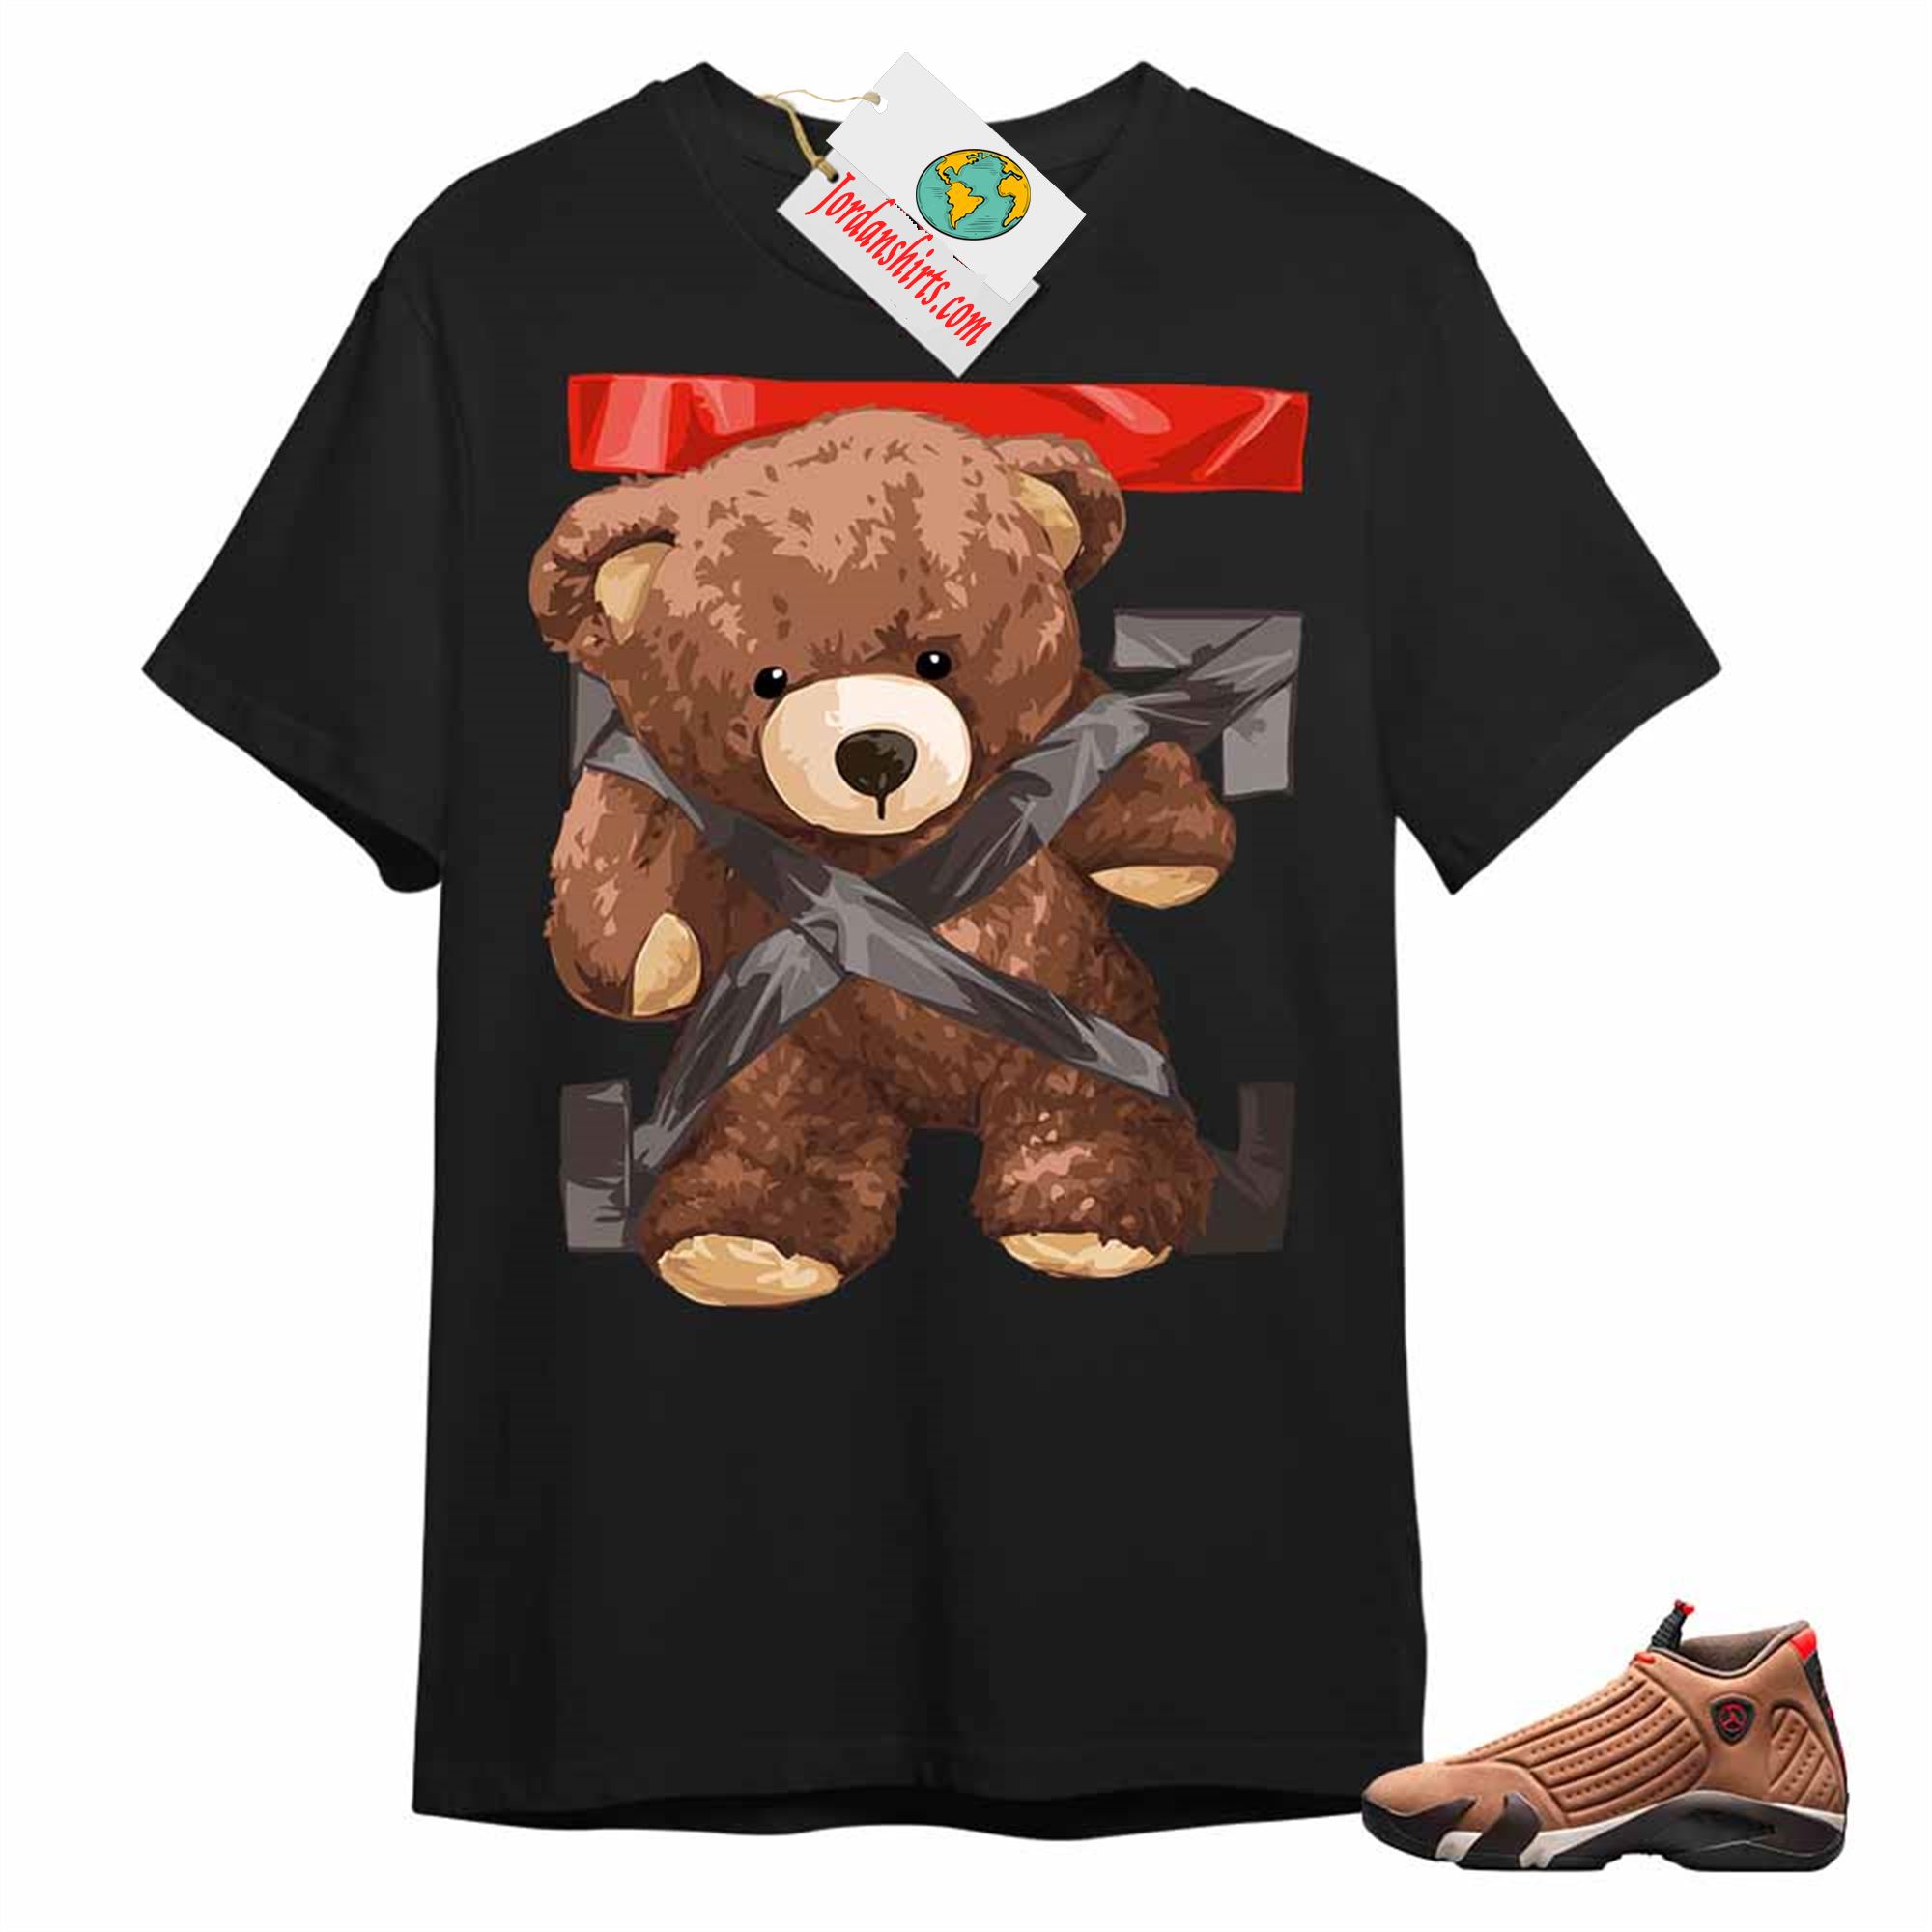 Jordan 14 Shirt, Teddy Bear Duck Tape Black T-shirt Air Jordan 14 Winterized 14s Plus Size Up To 5xl